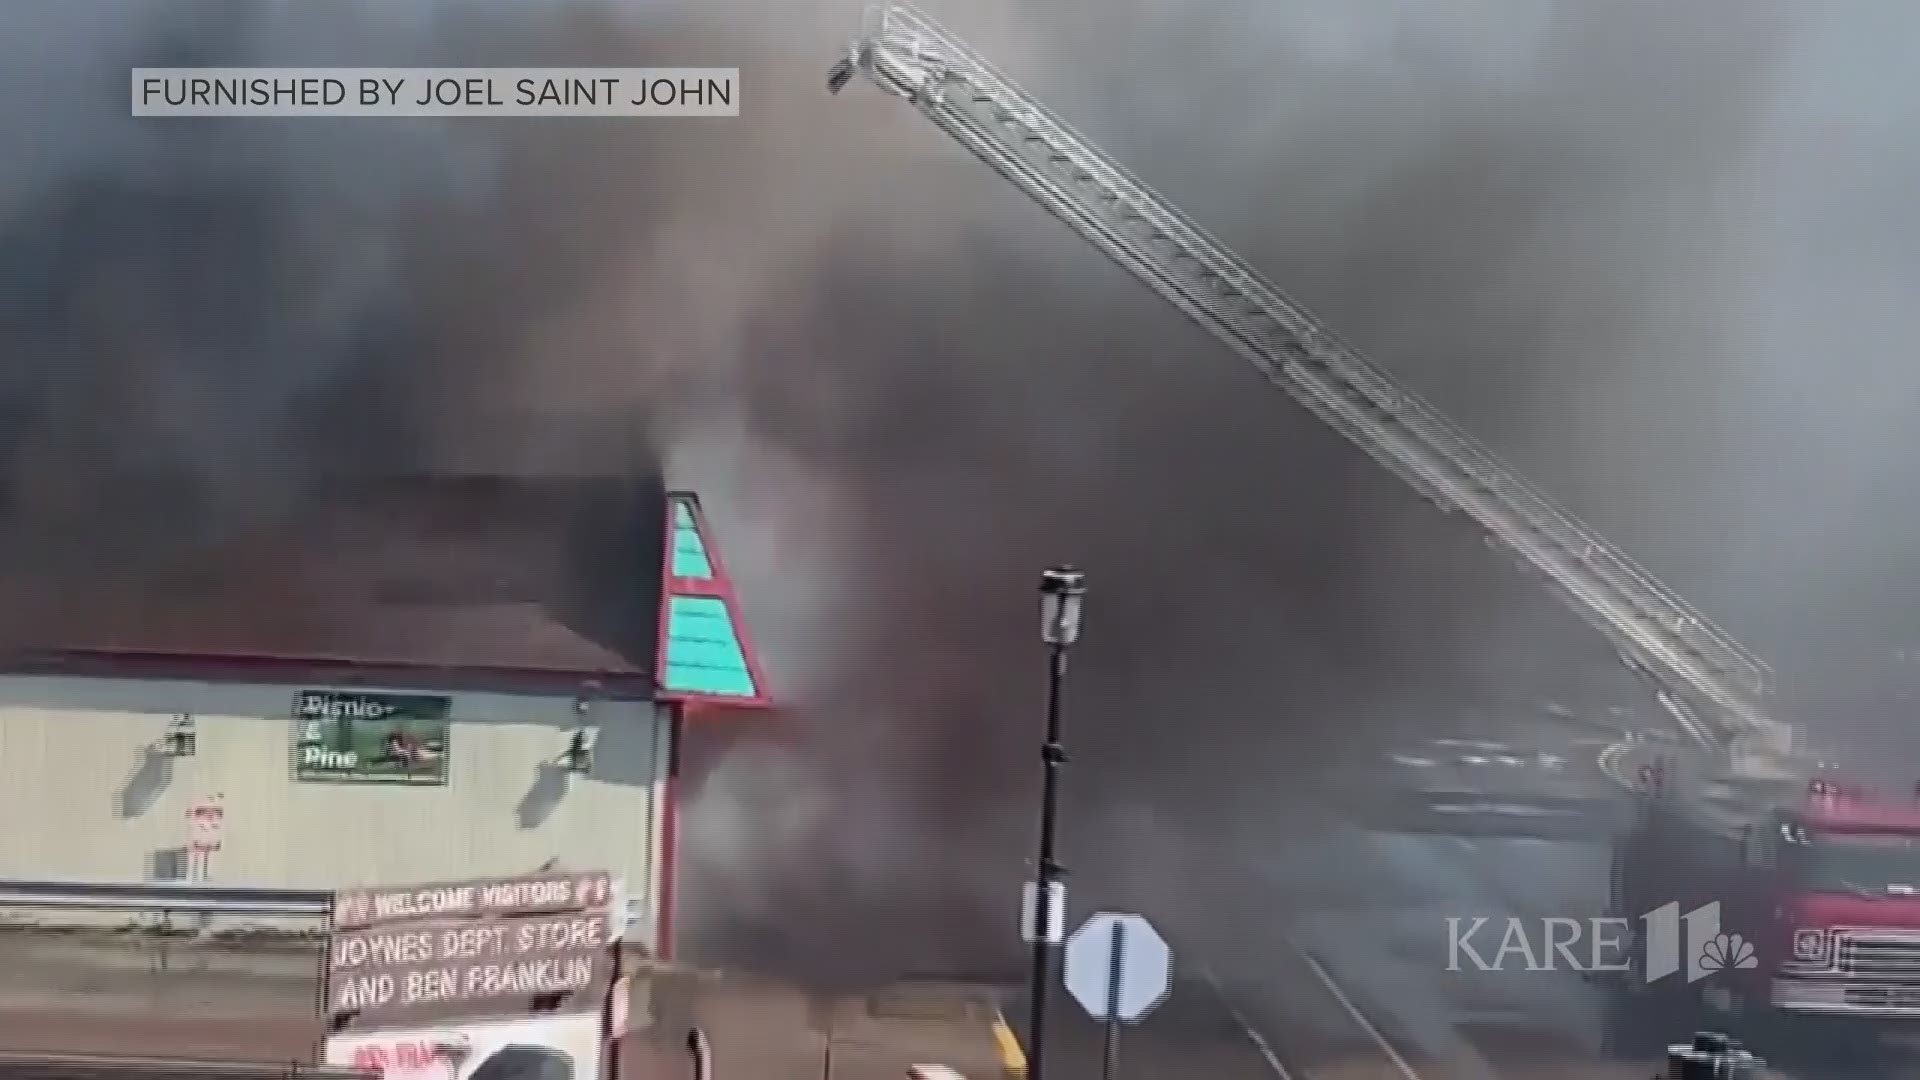 Video of fire burning in downtown Grand Marais, Minn. (furnished by Joel Saint John)